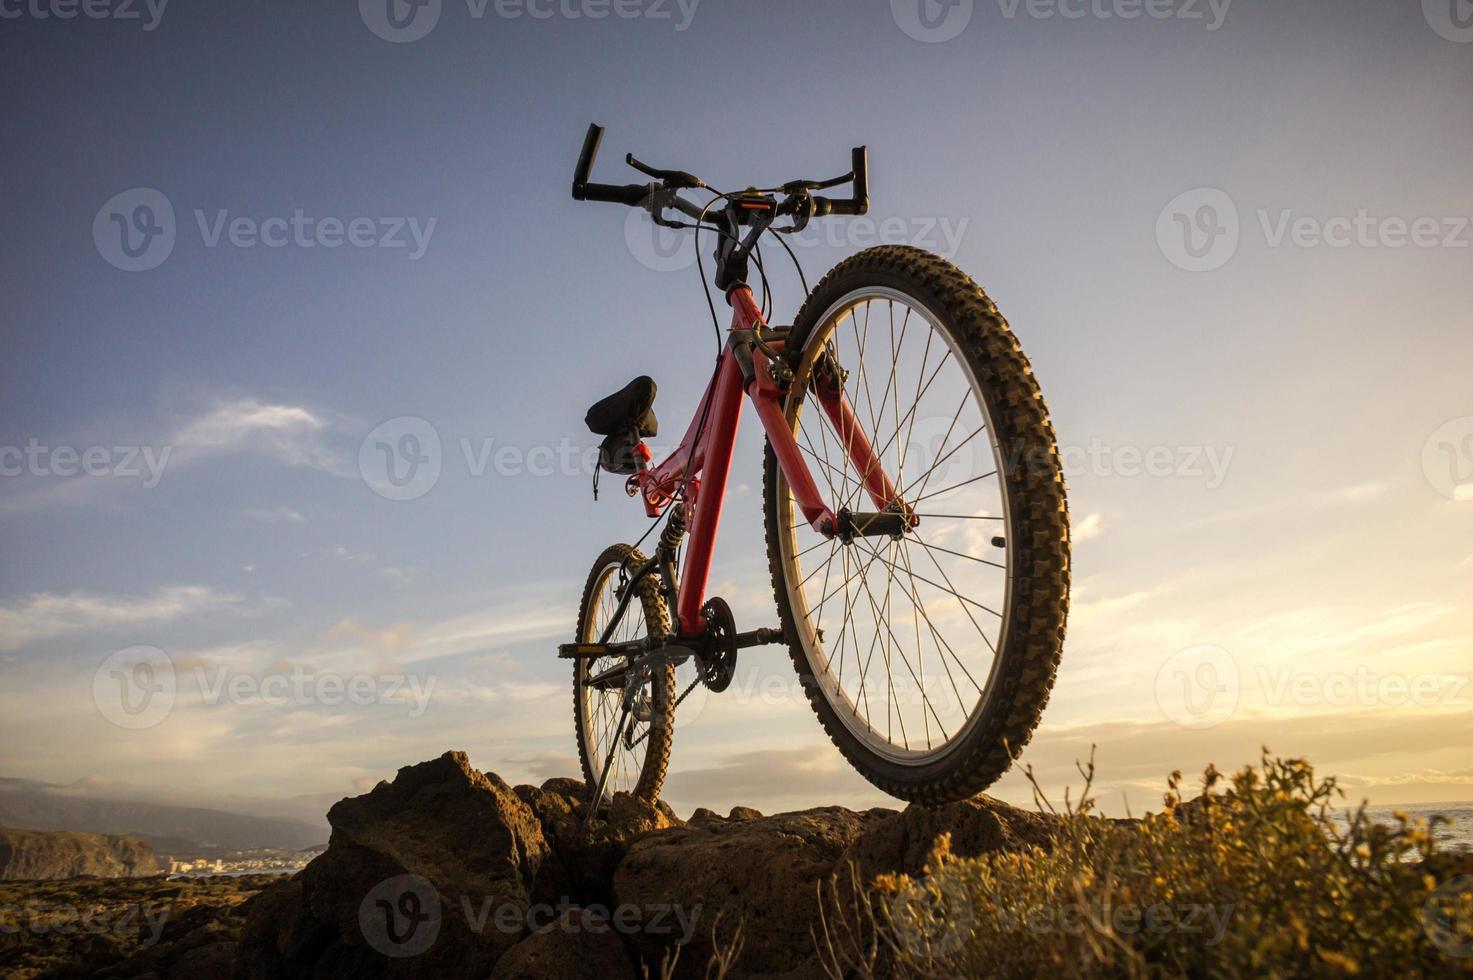 Bike at sunset photo